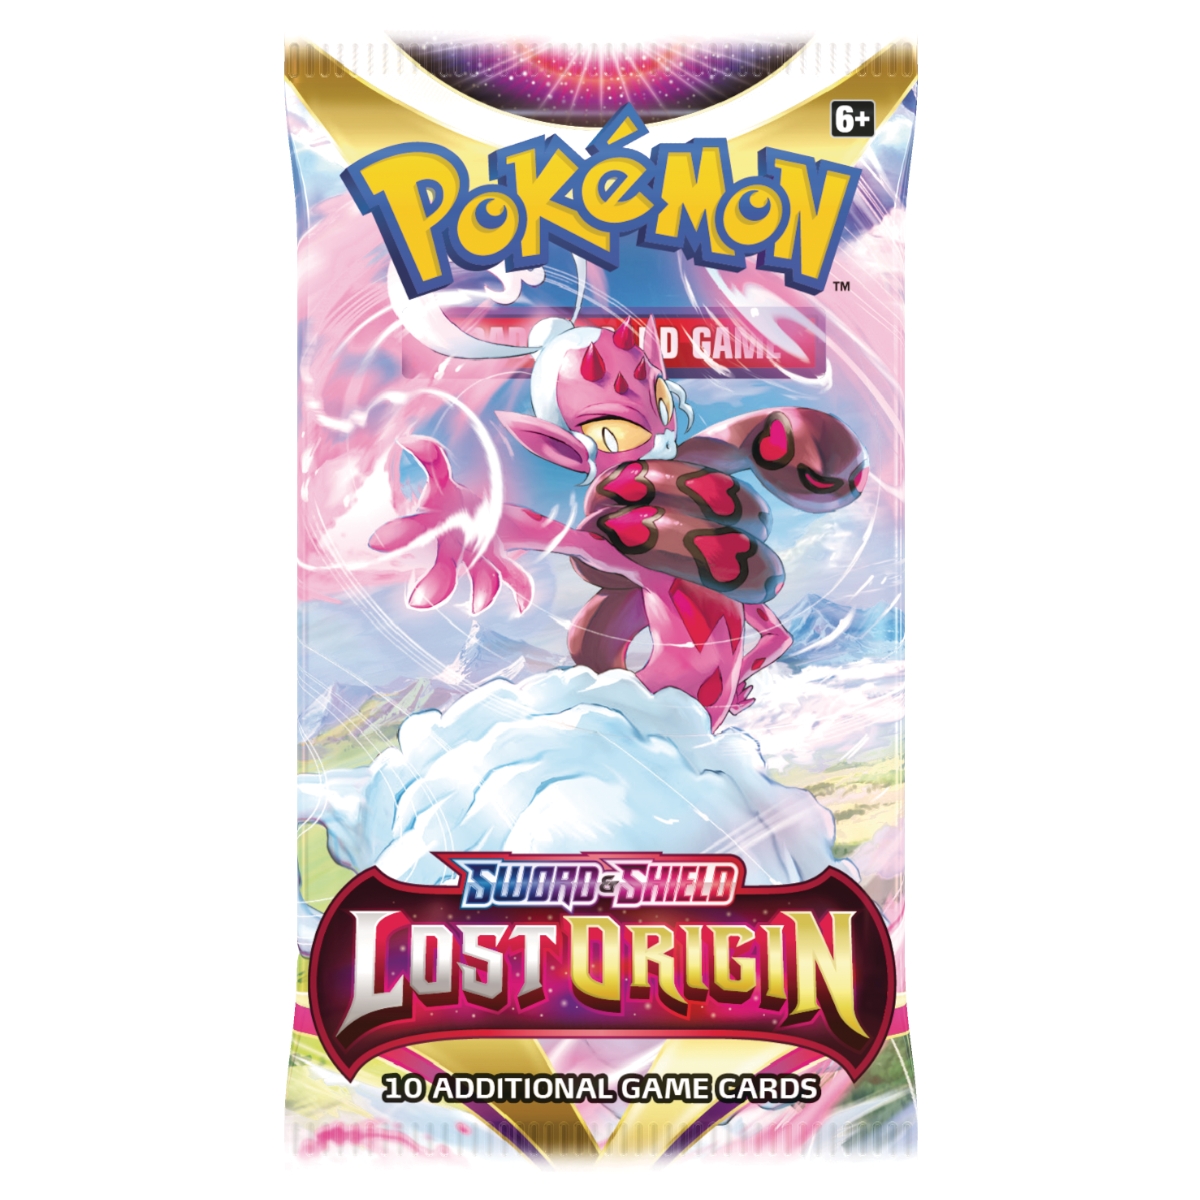 Pokémon - Lost Origin Booster